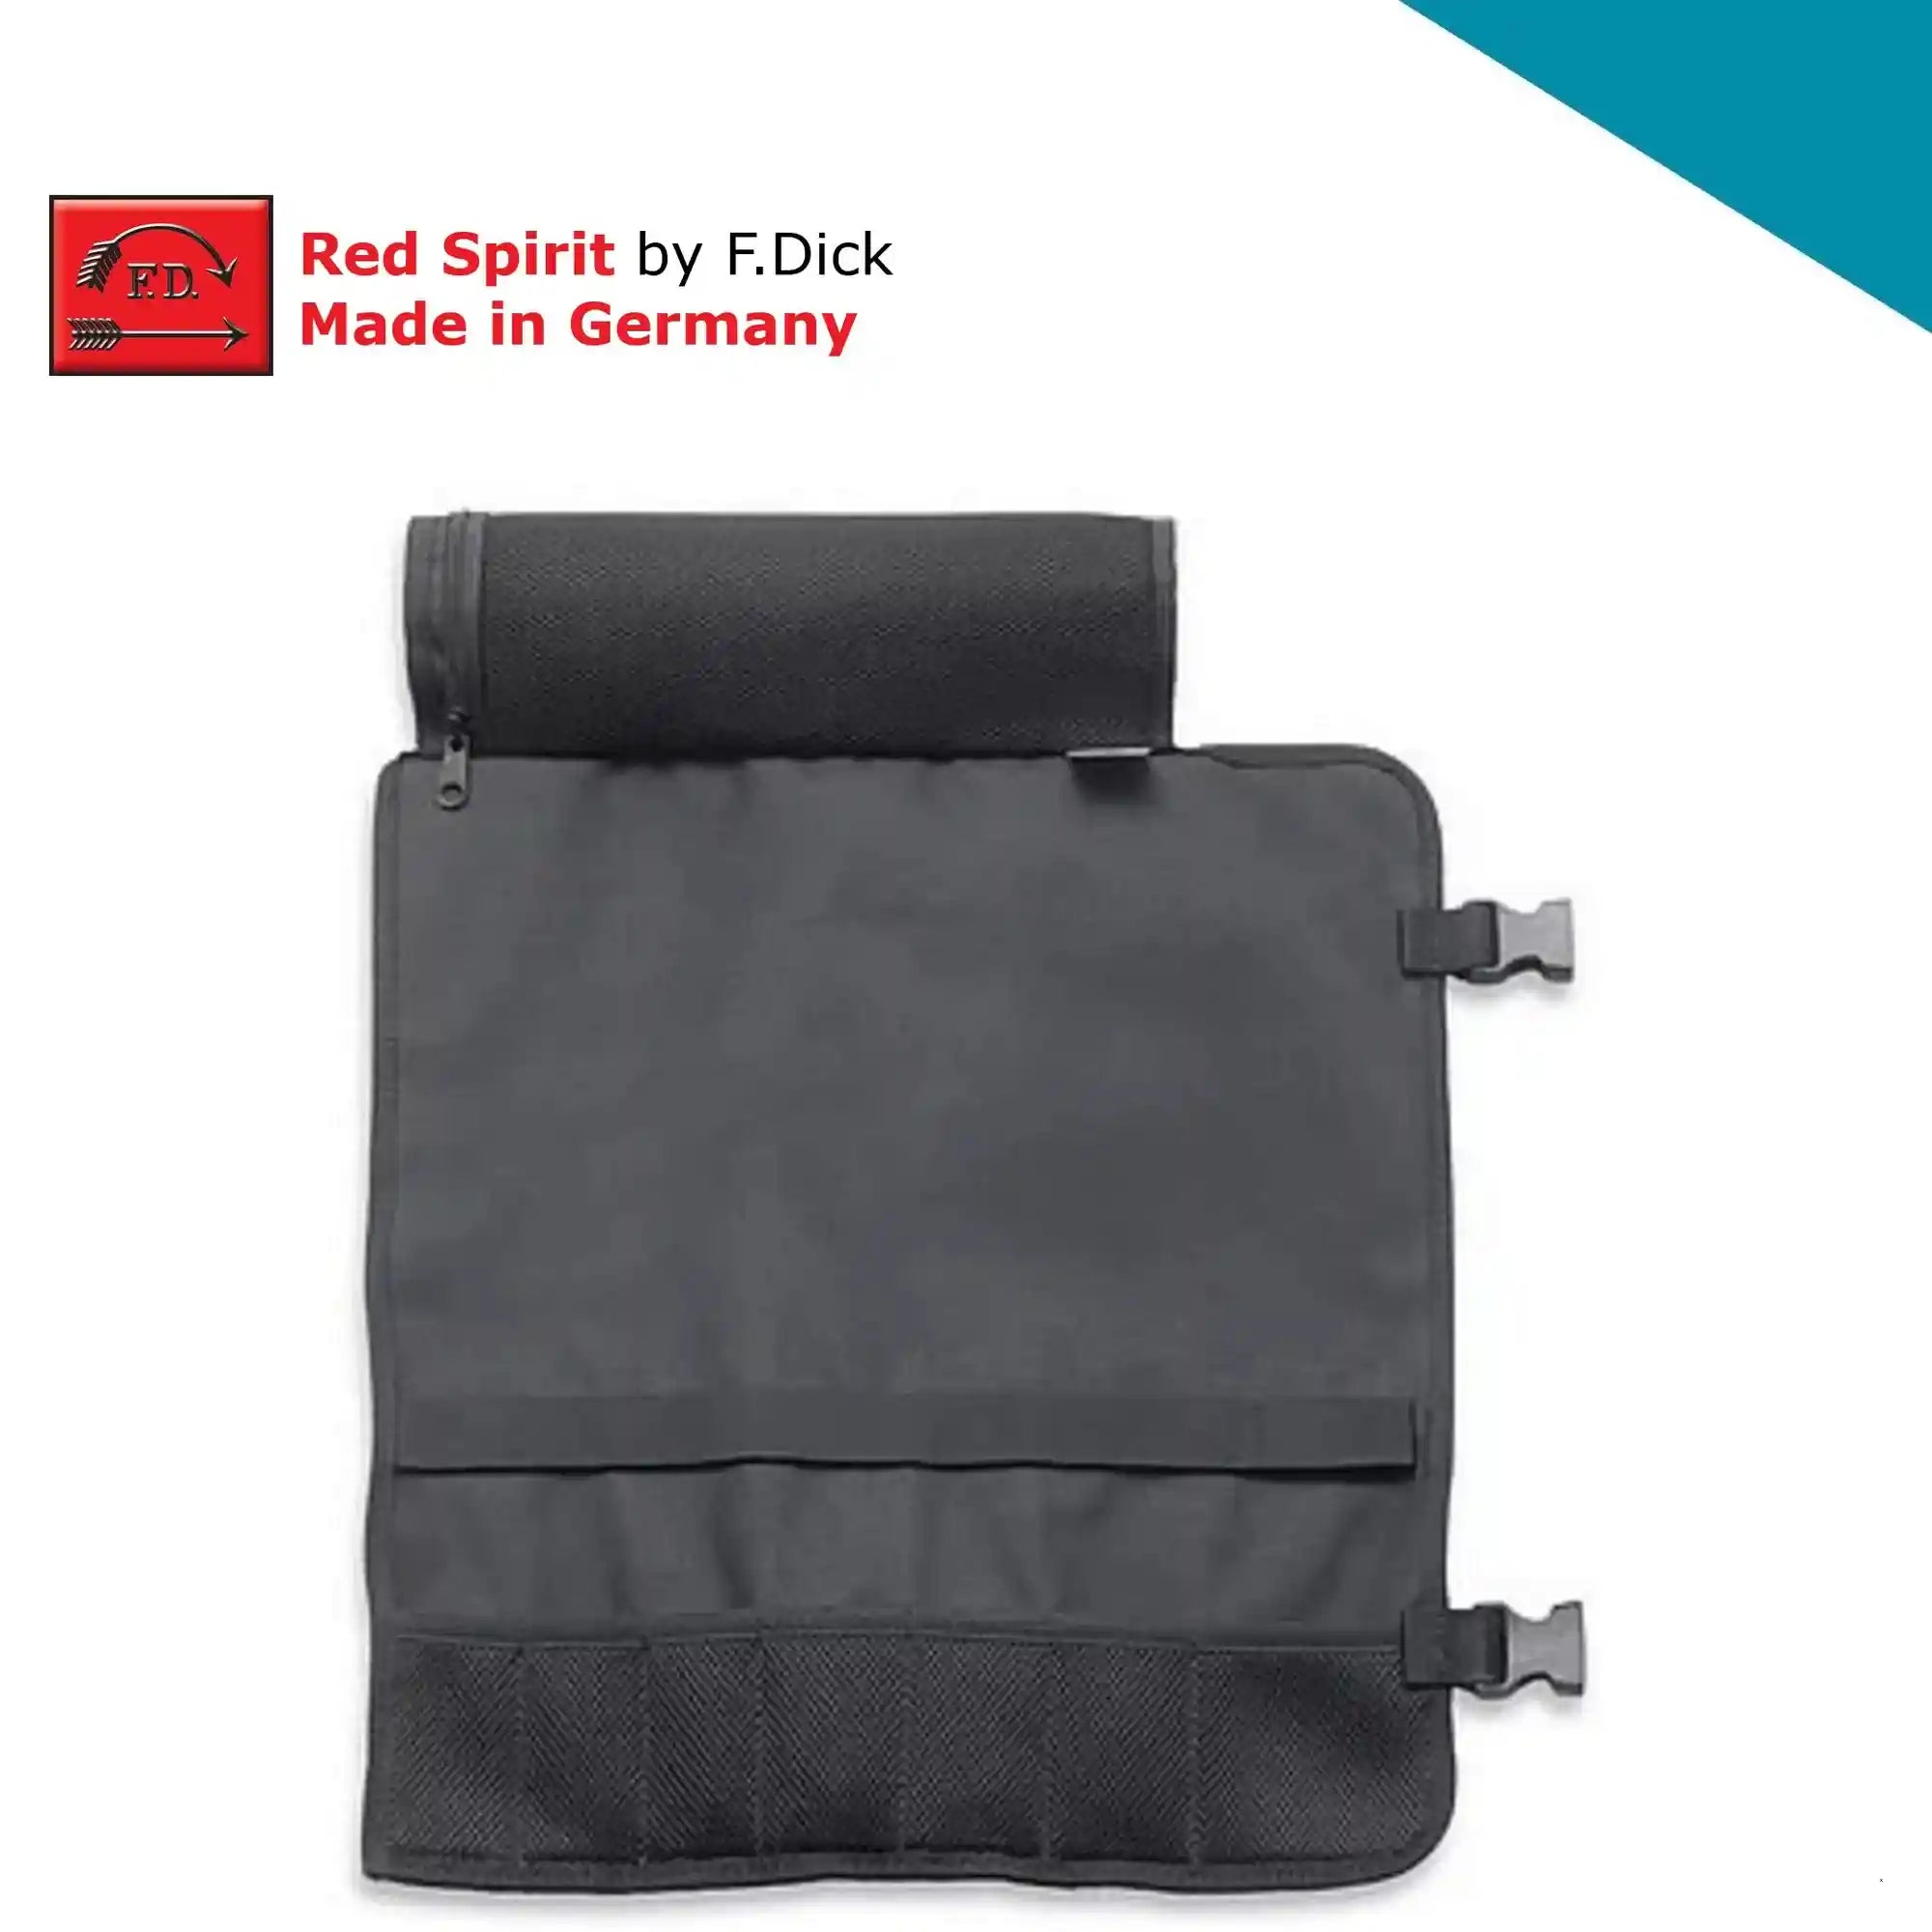 F.Dick Red Spirit Textile Roll Bag, 6pcs